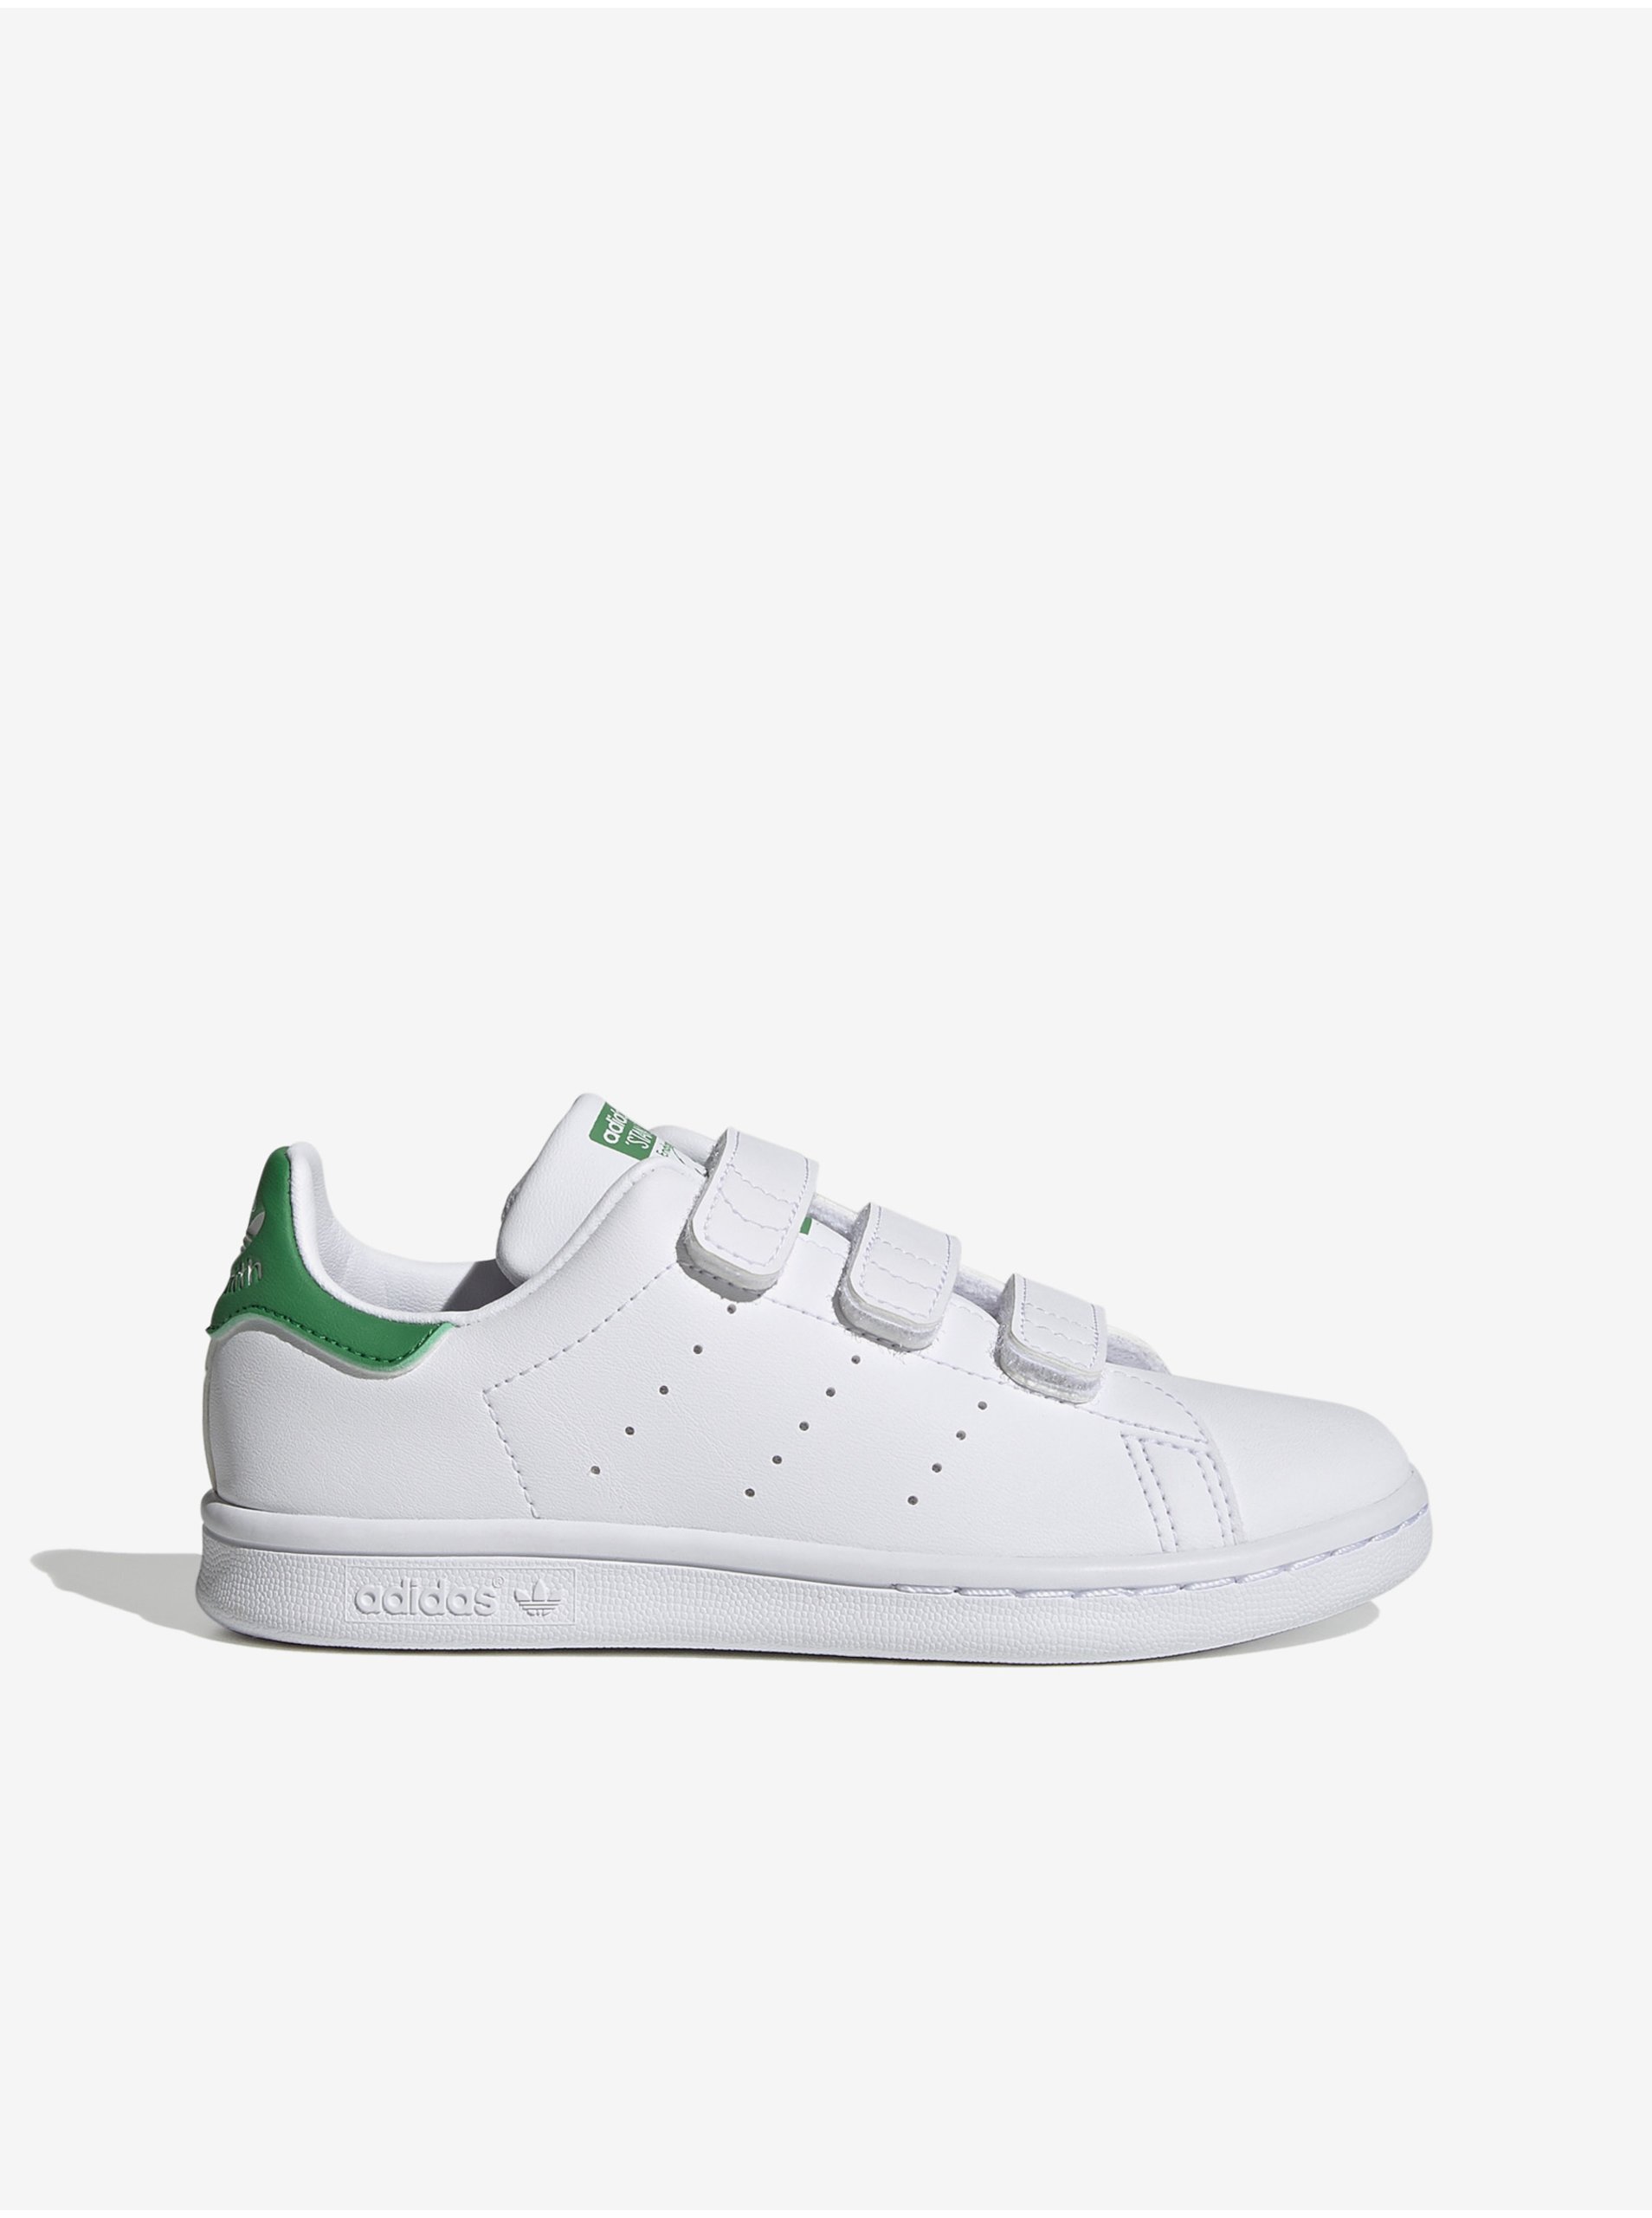 E-shop Bílé dětské tenisky adidas Originals Stan Smith